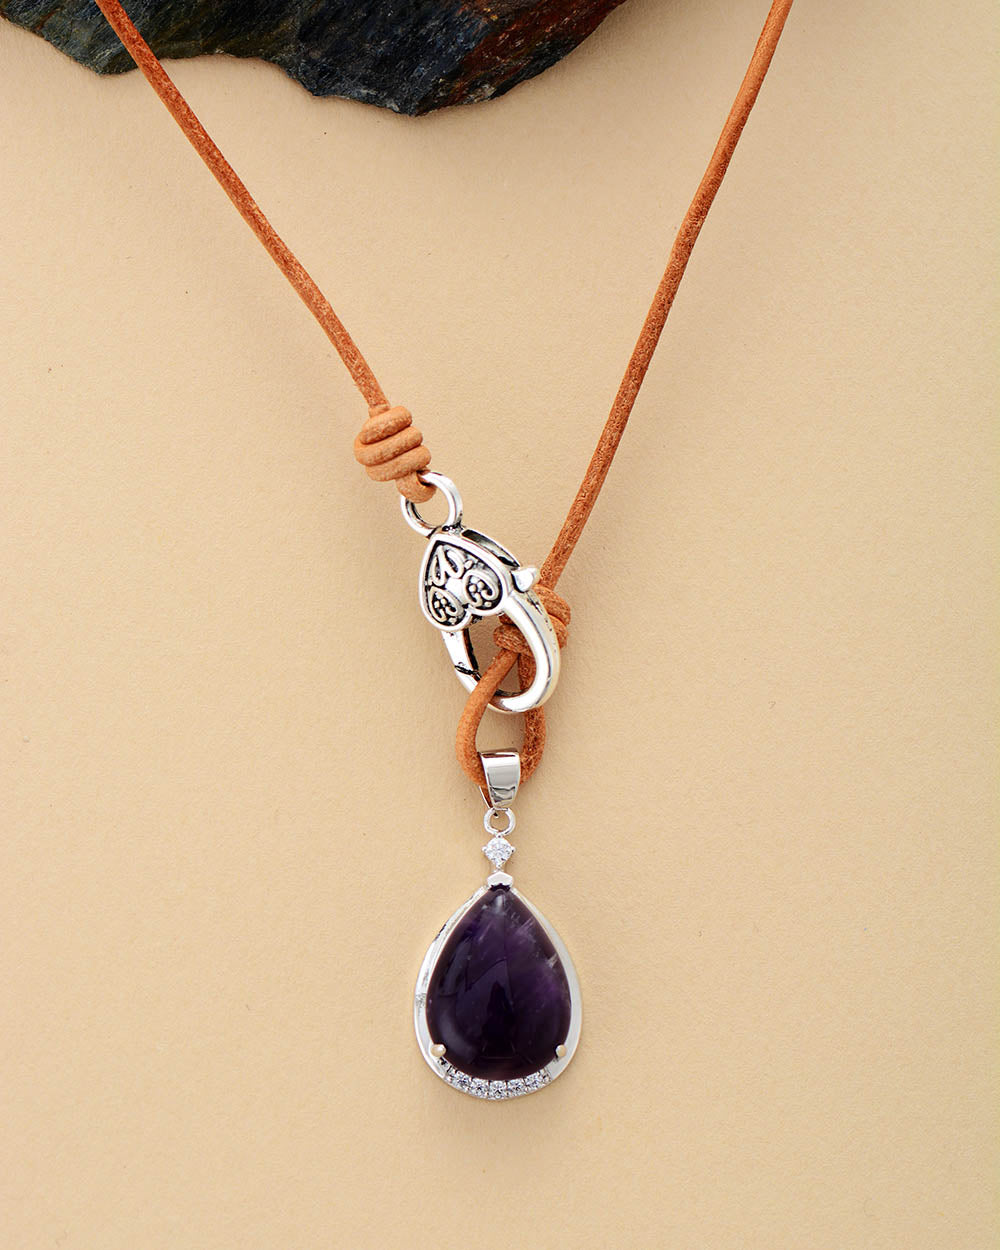 Handmade Amethyst Teardrop Pendant Leather Necklace